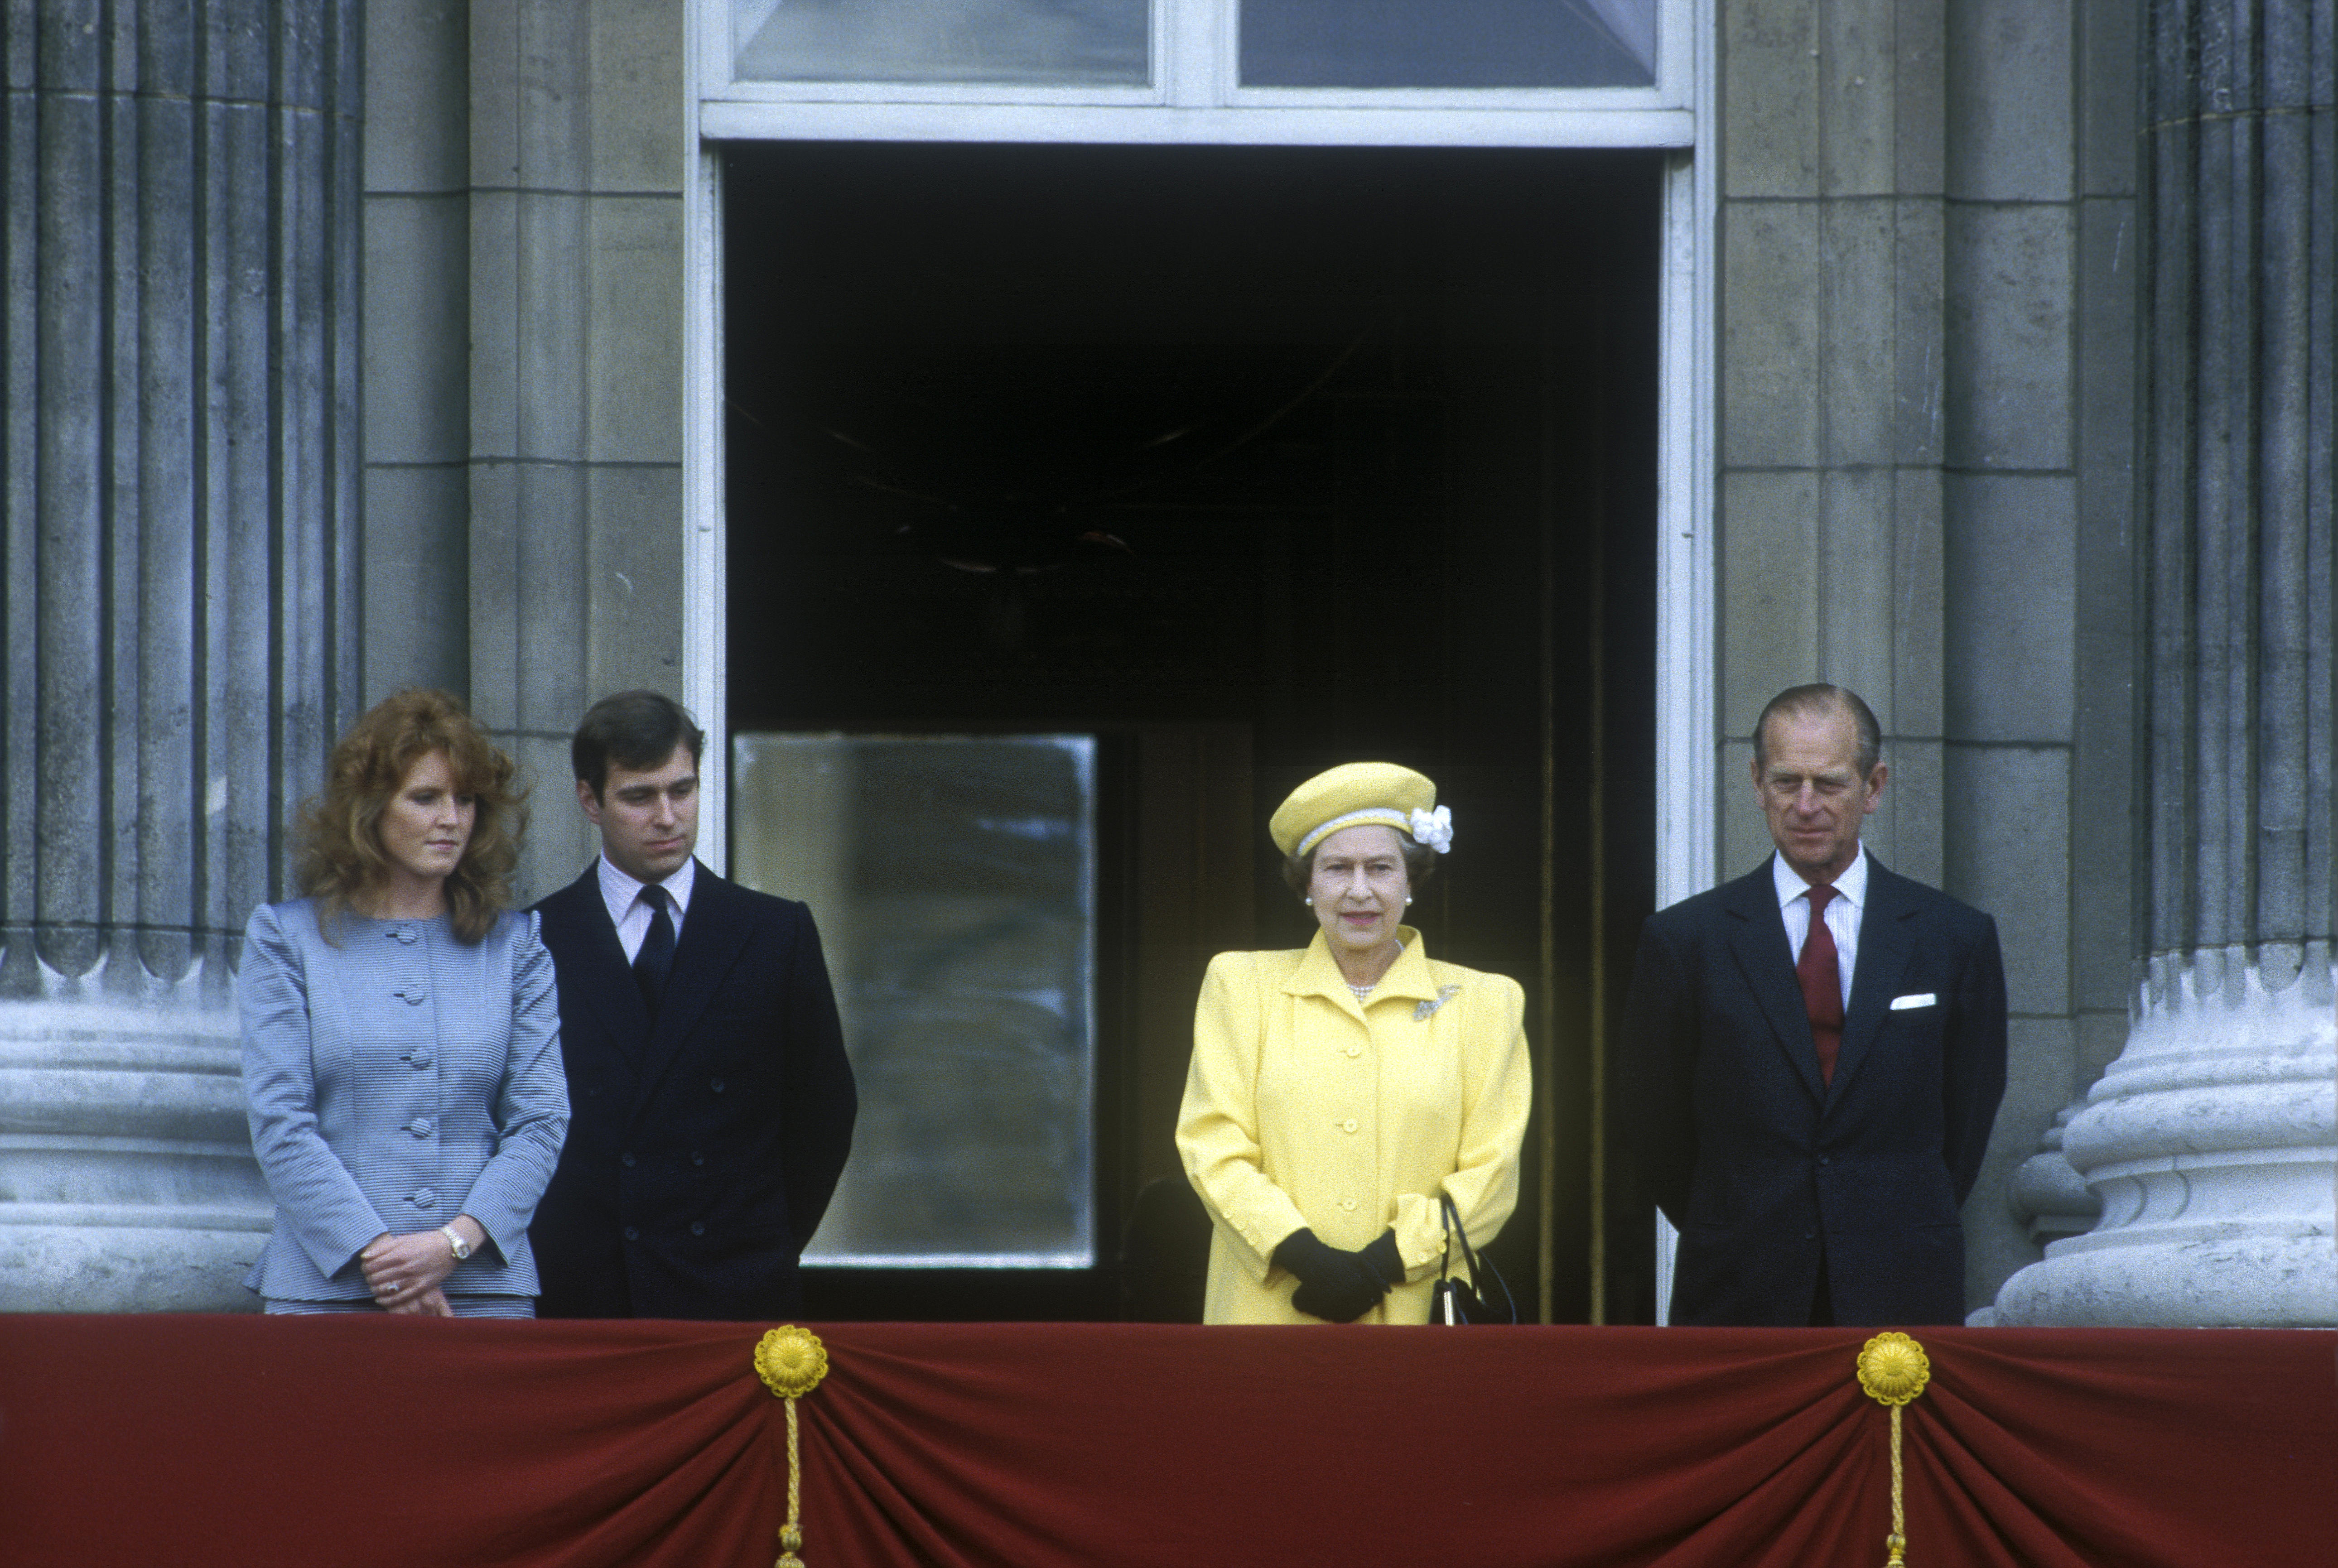  Sarah Ferguson, Prince Andrew, Queen Elizabeth II, and Prince Philip